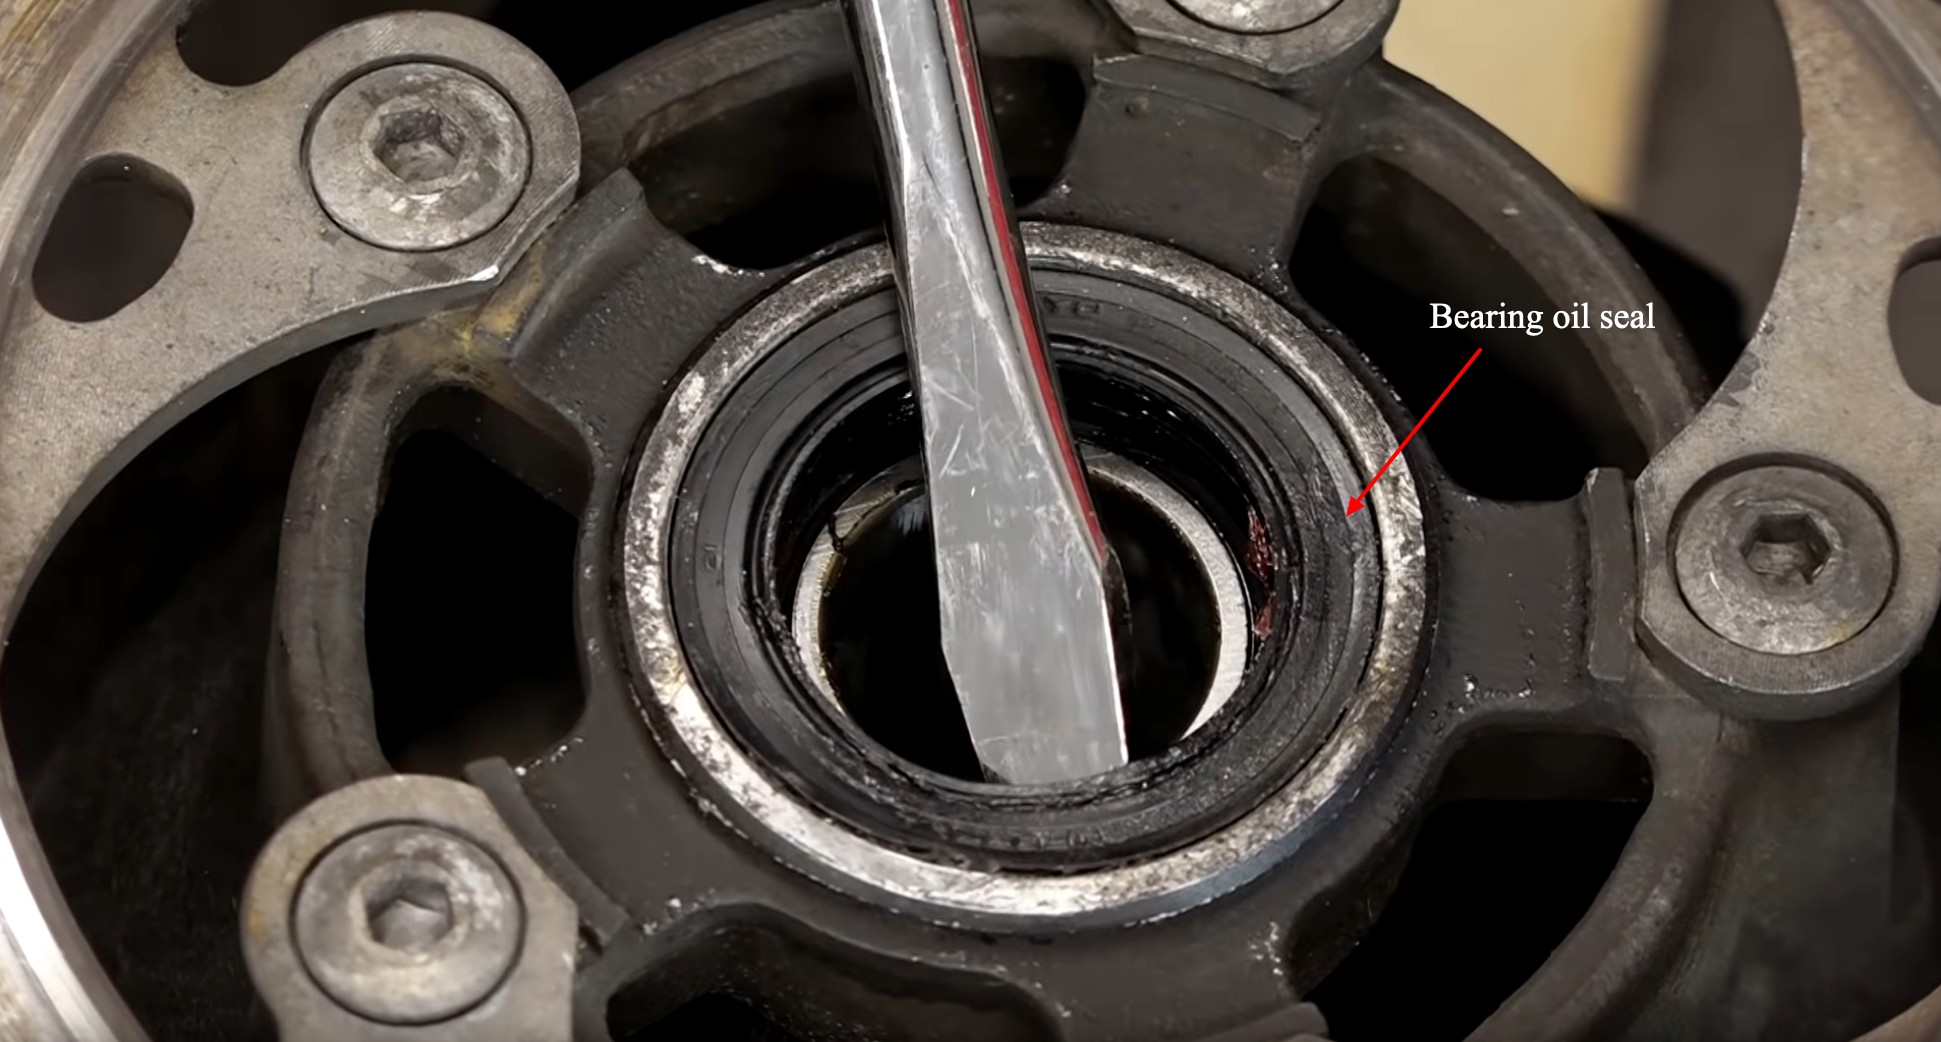 Suzuki GSX-R 1000 rear wheel bearing oil seal